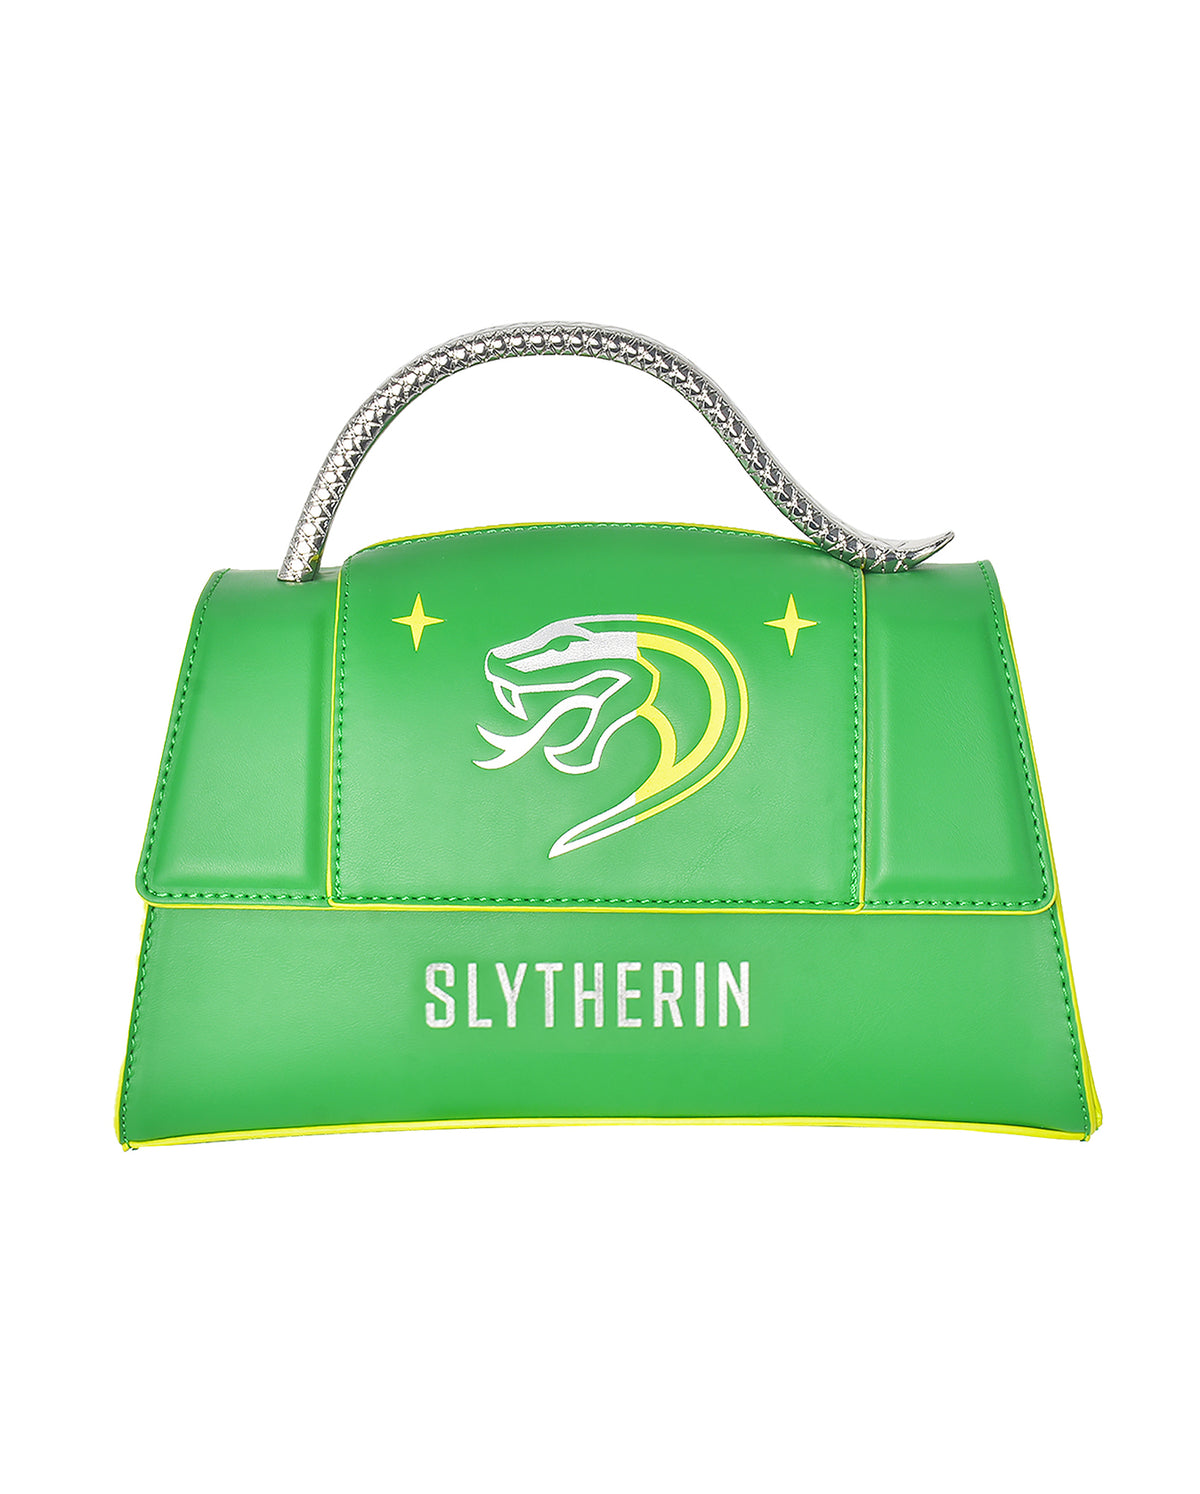 Slytherin House Mascot Satchel